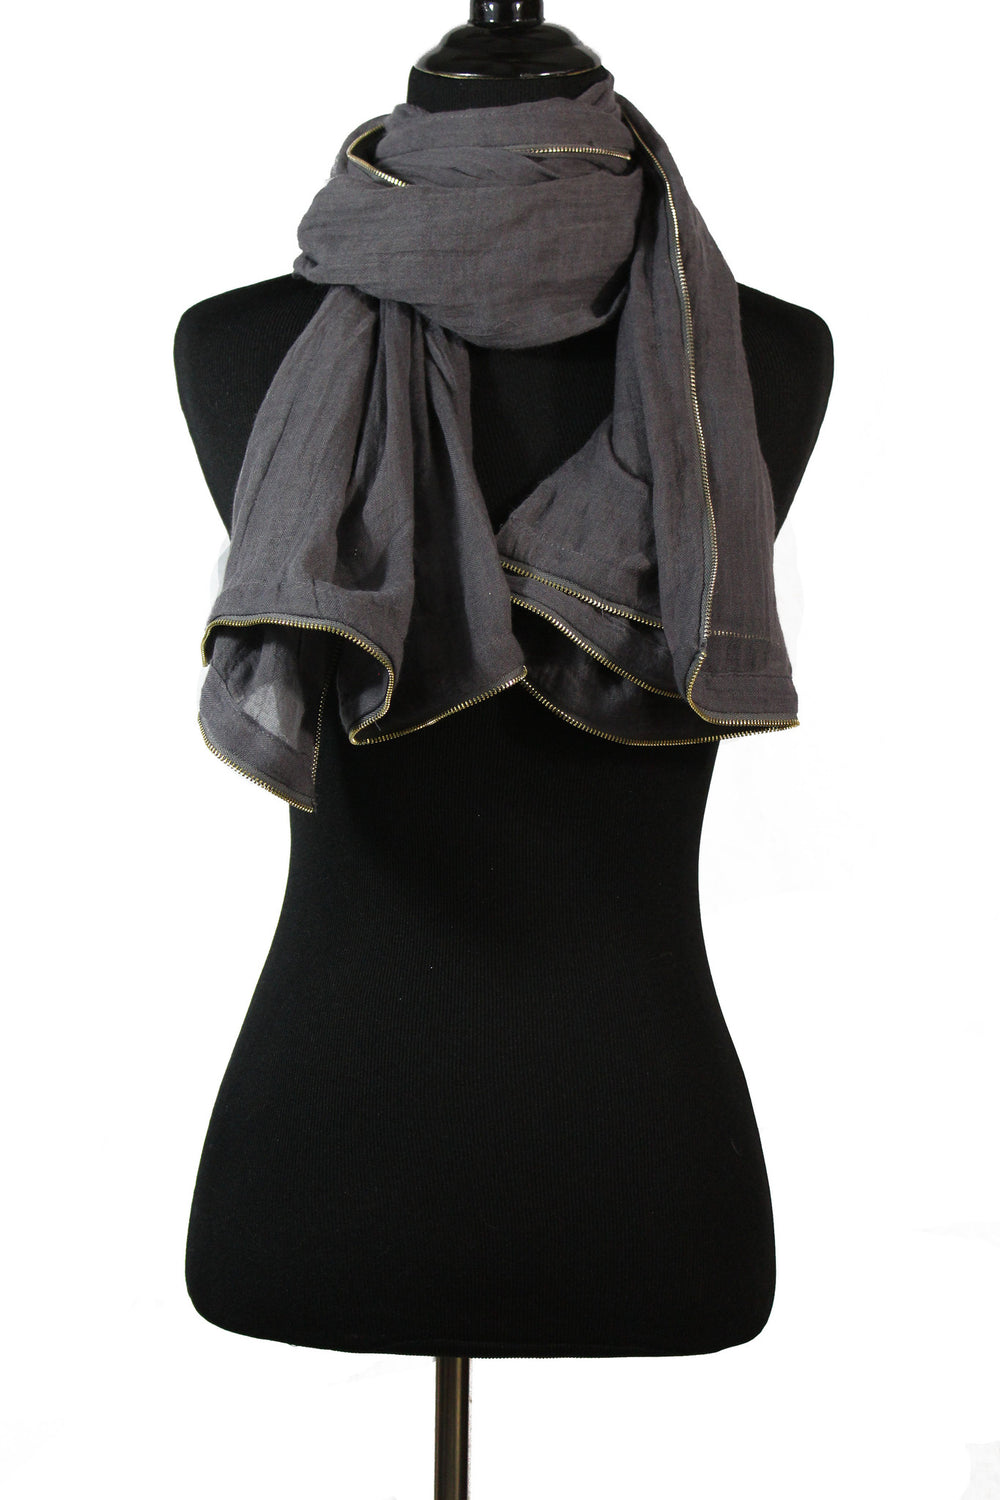 gray solid viscose hijab with zipper edge trim